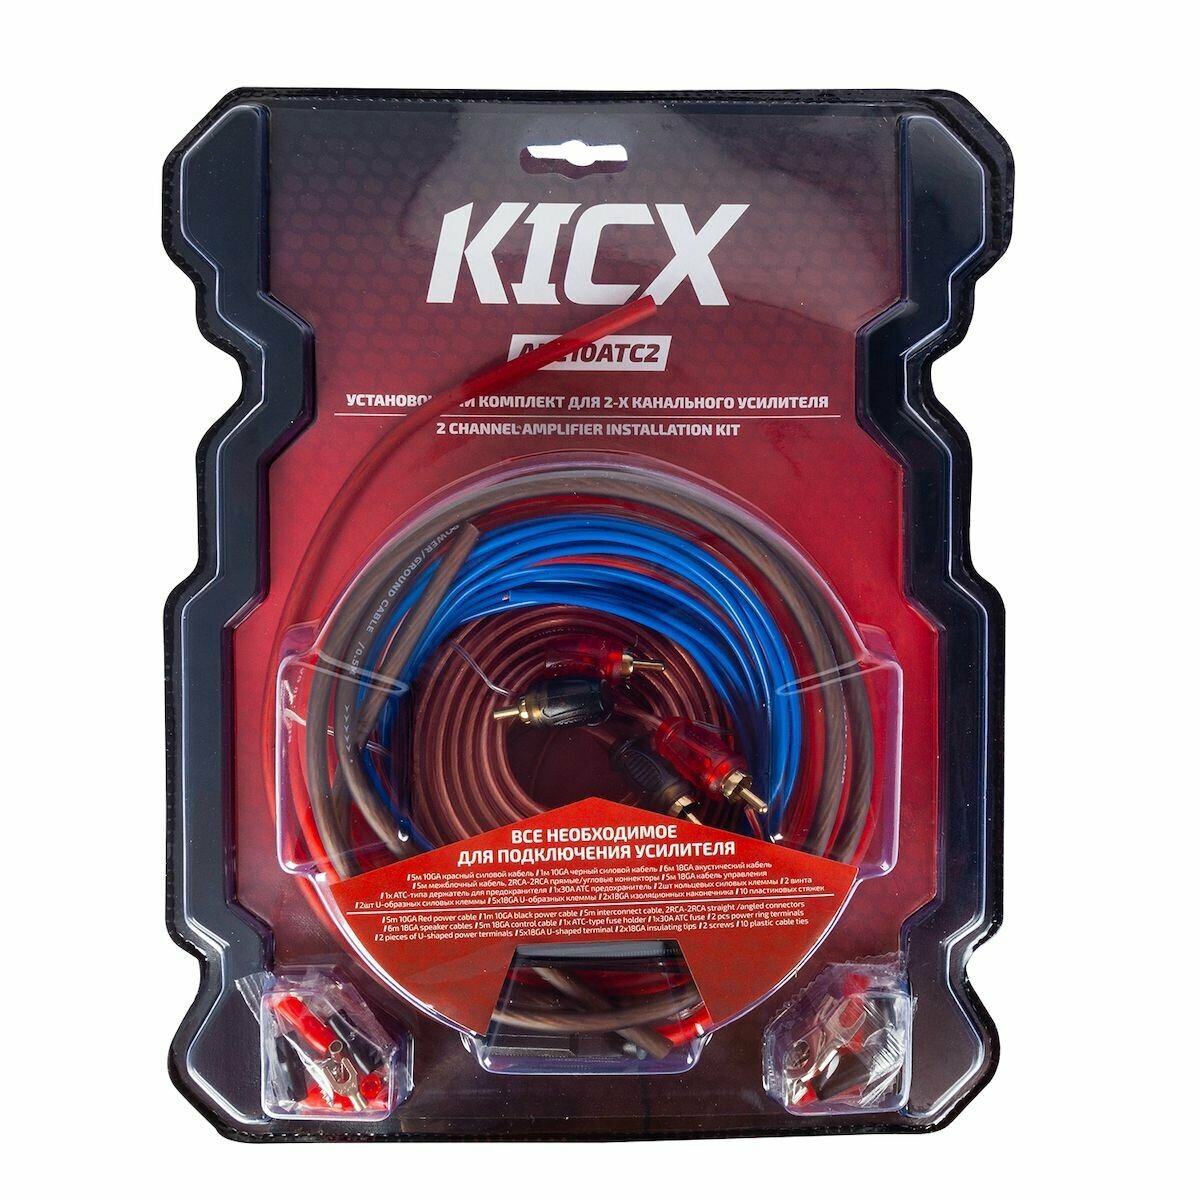 Установочный комплект Kicx AKC10ATC2 мультиколор